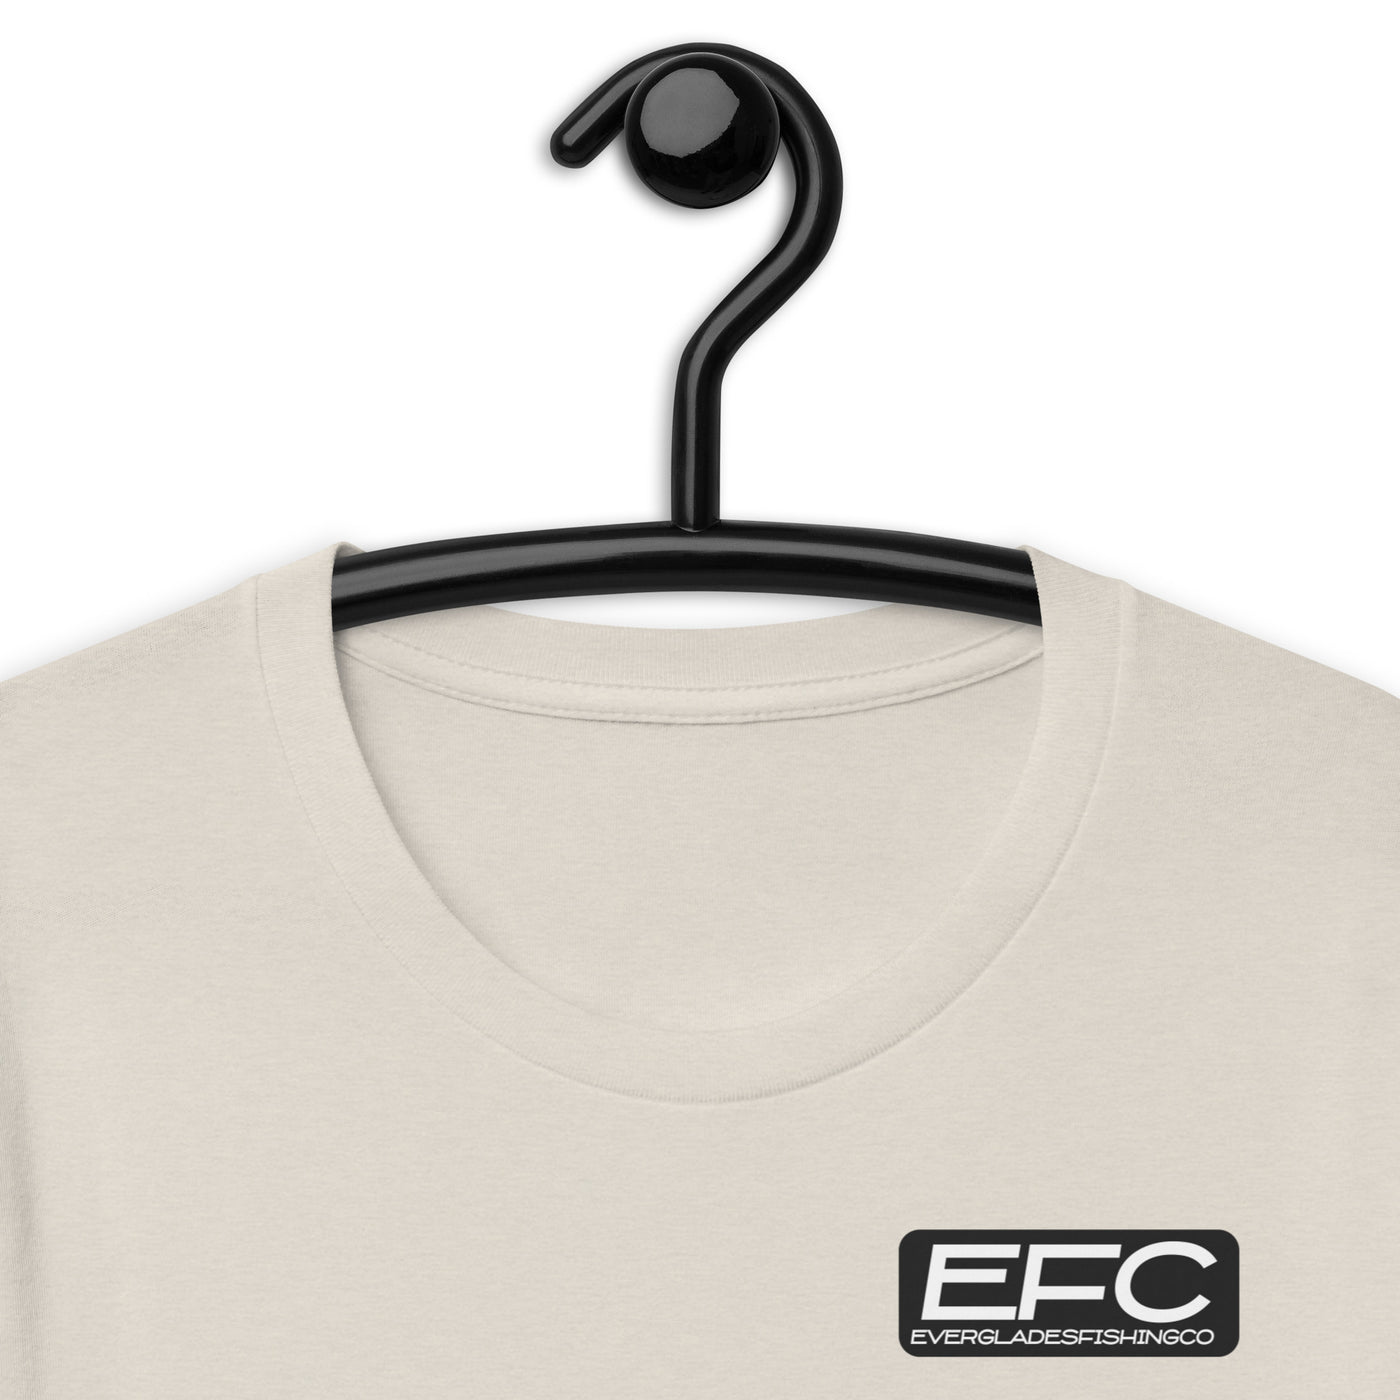 EFC EVERGLADES CITY t-shirt